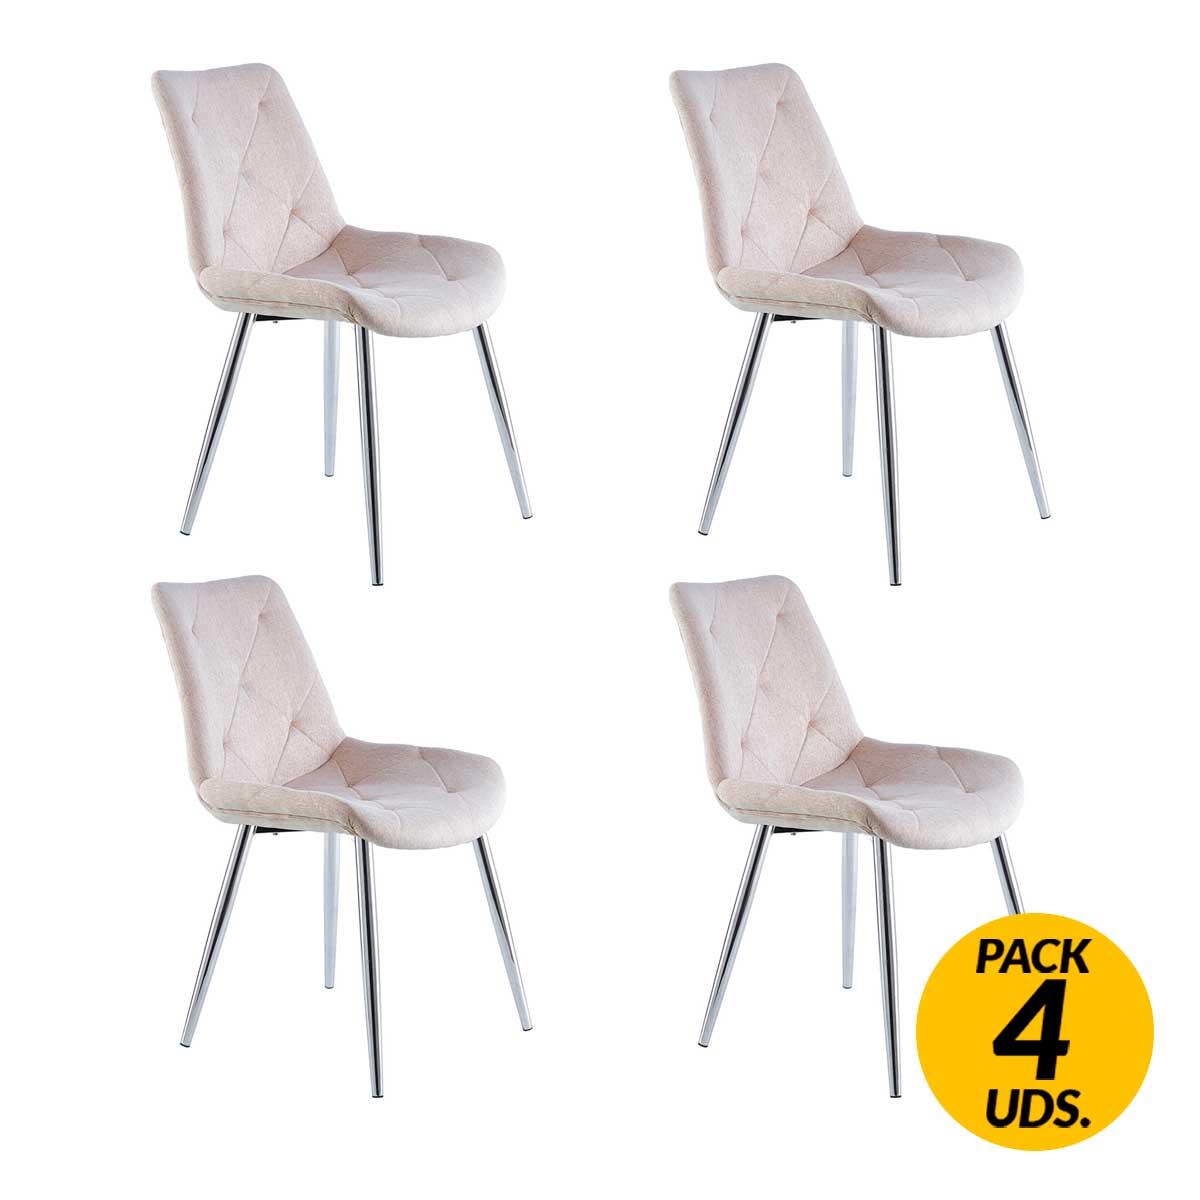 Adec - Adec Pack de 4 sillas Marlene tejido tapizado